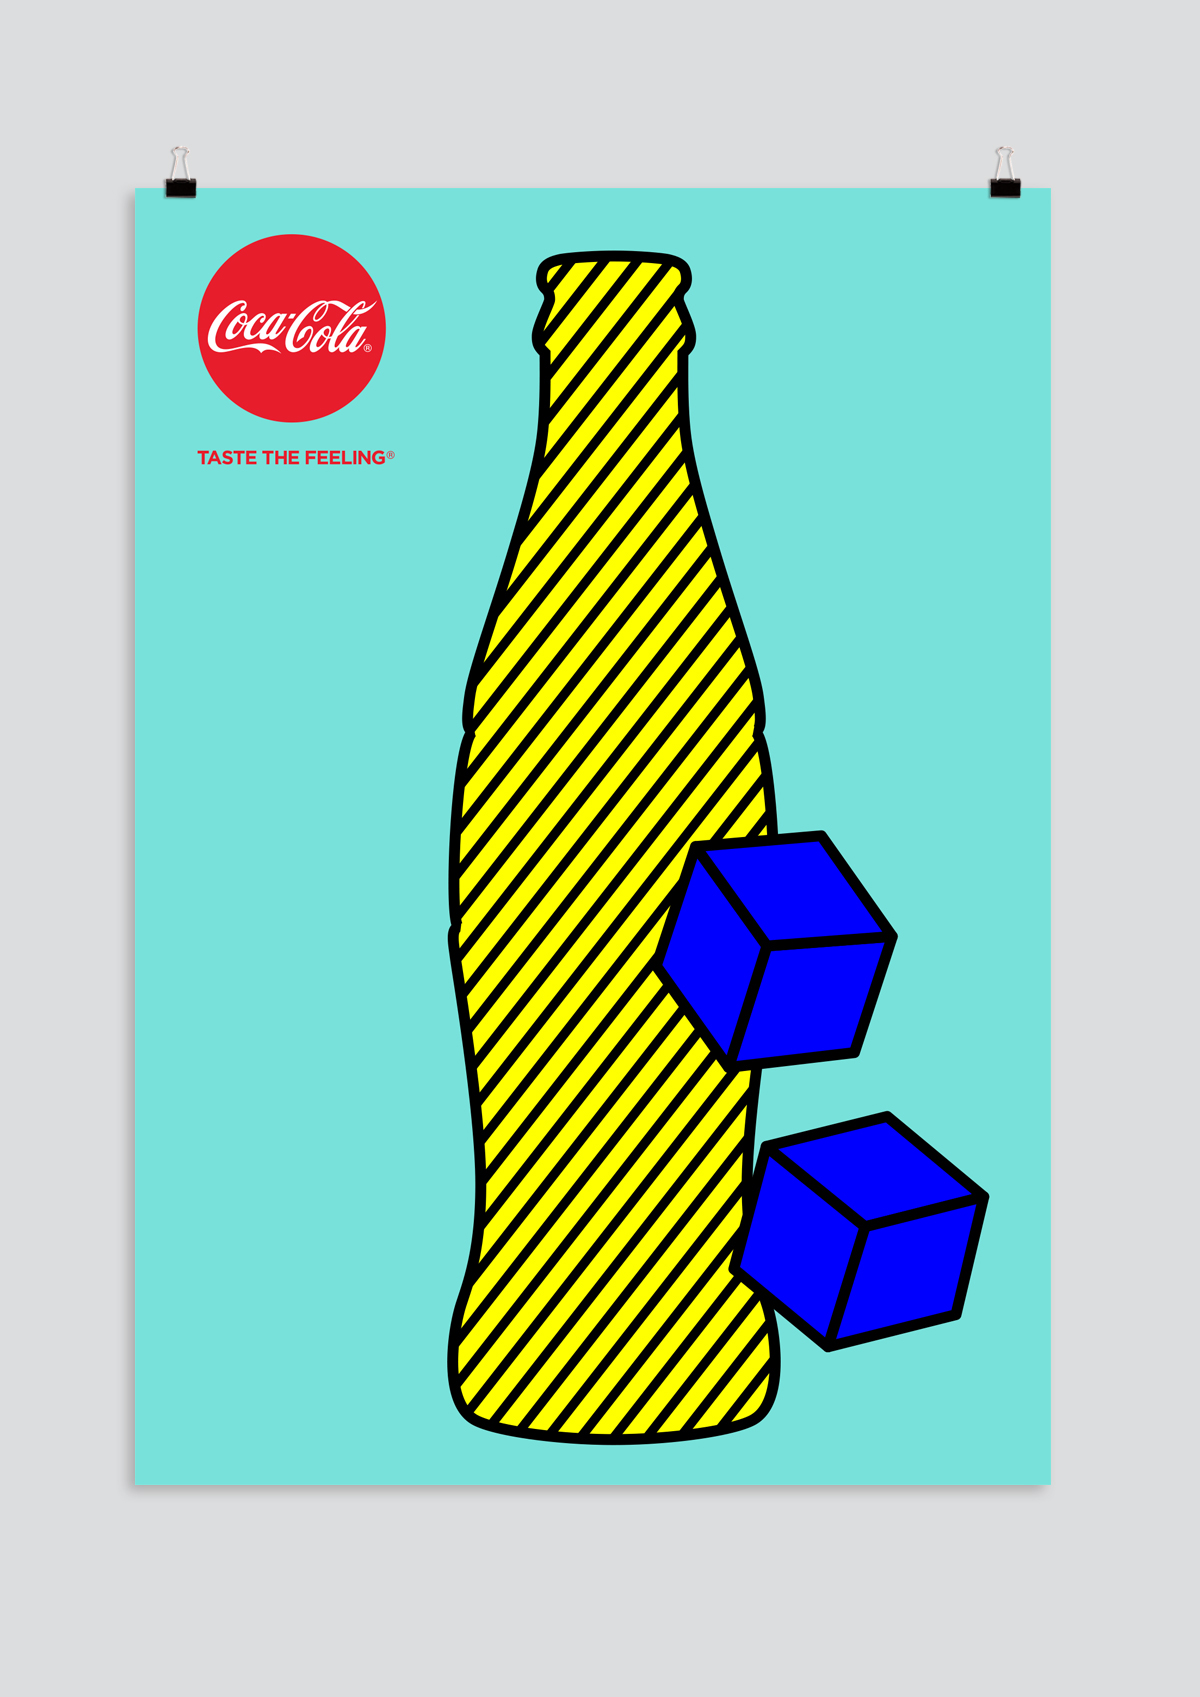 ice cold poster vintage Pop Art Coca-Cola